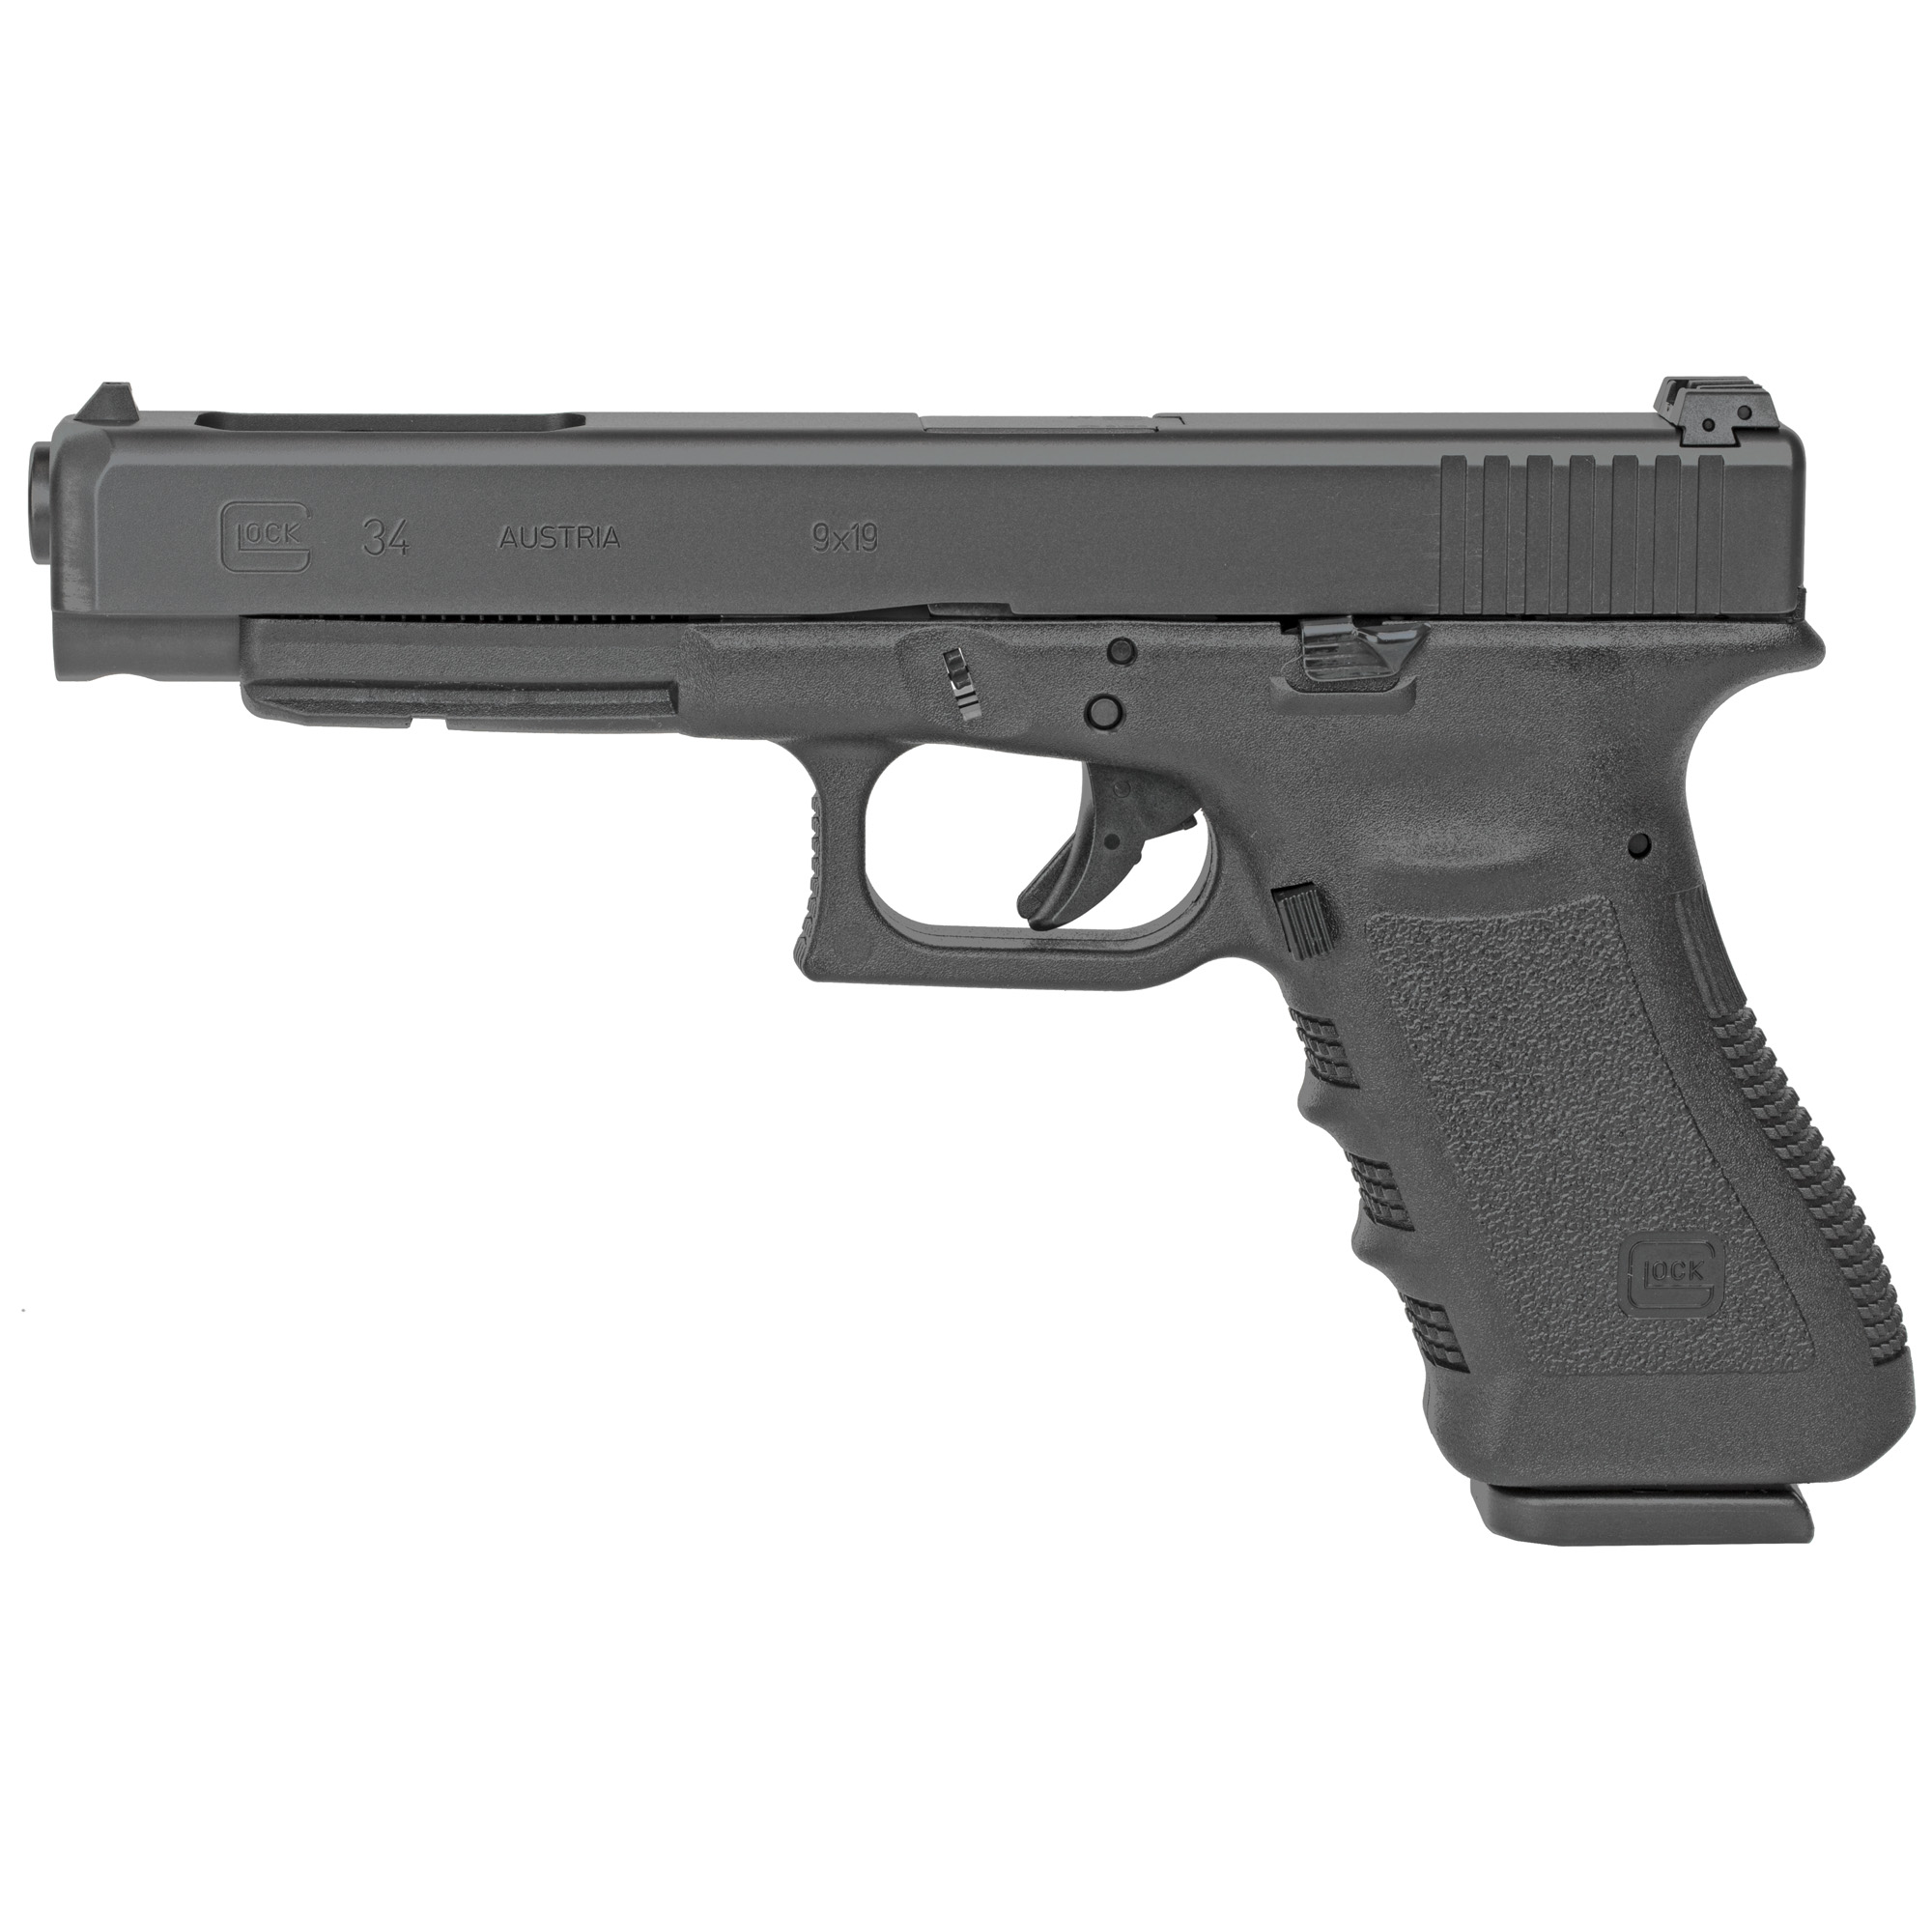 Glock, 34 Gen3, Striker Fired, Semi-automatic, Polymer Frame Pistol, Full Size, 9MM, 5.31" Barrel, Matte Finish, Black, Adjustable Sights, 17 Rounds, 2 Magazines